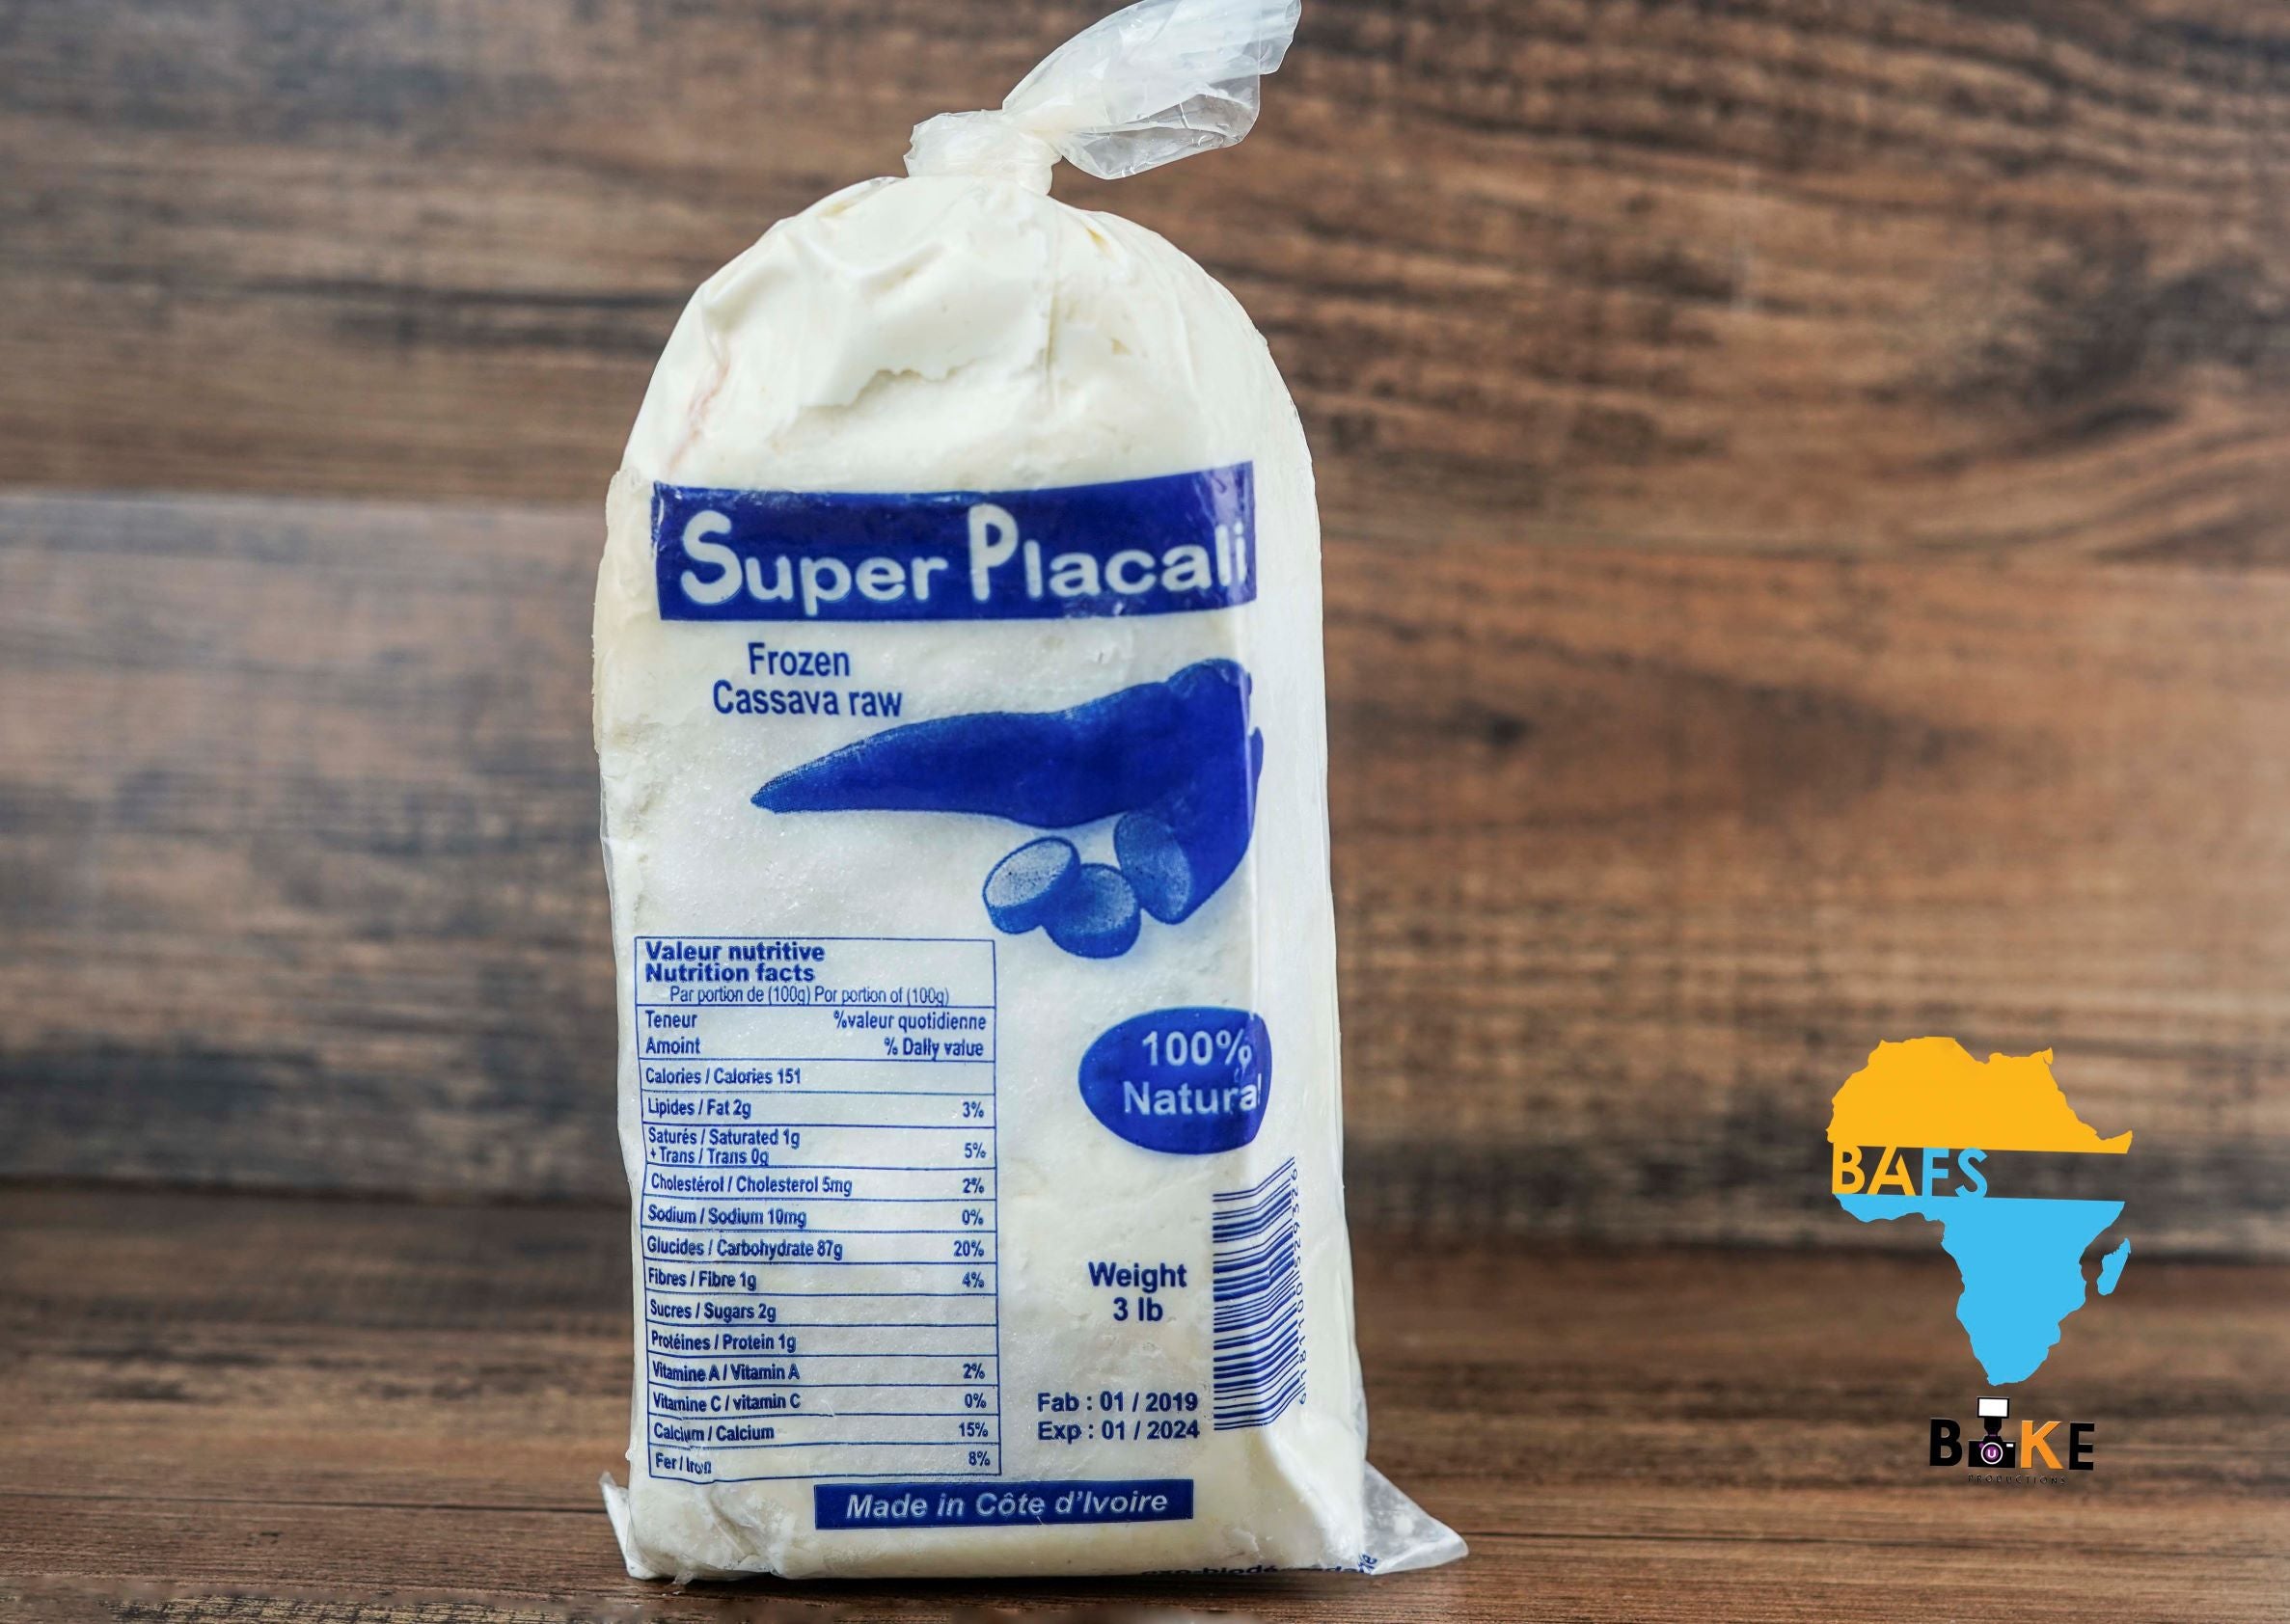 Super Placali - Frozen Cassava Raw